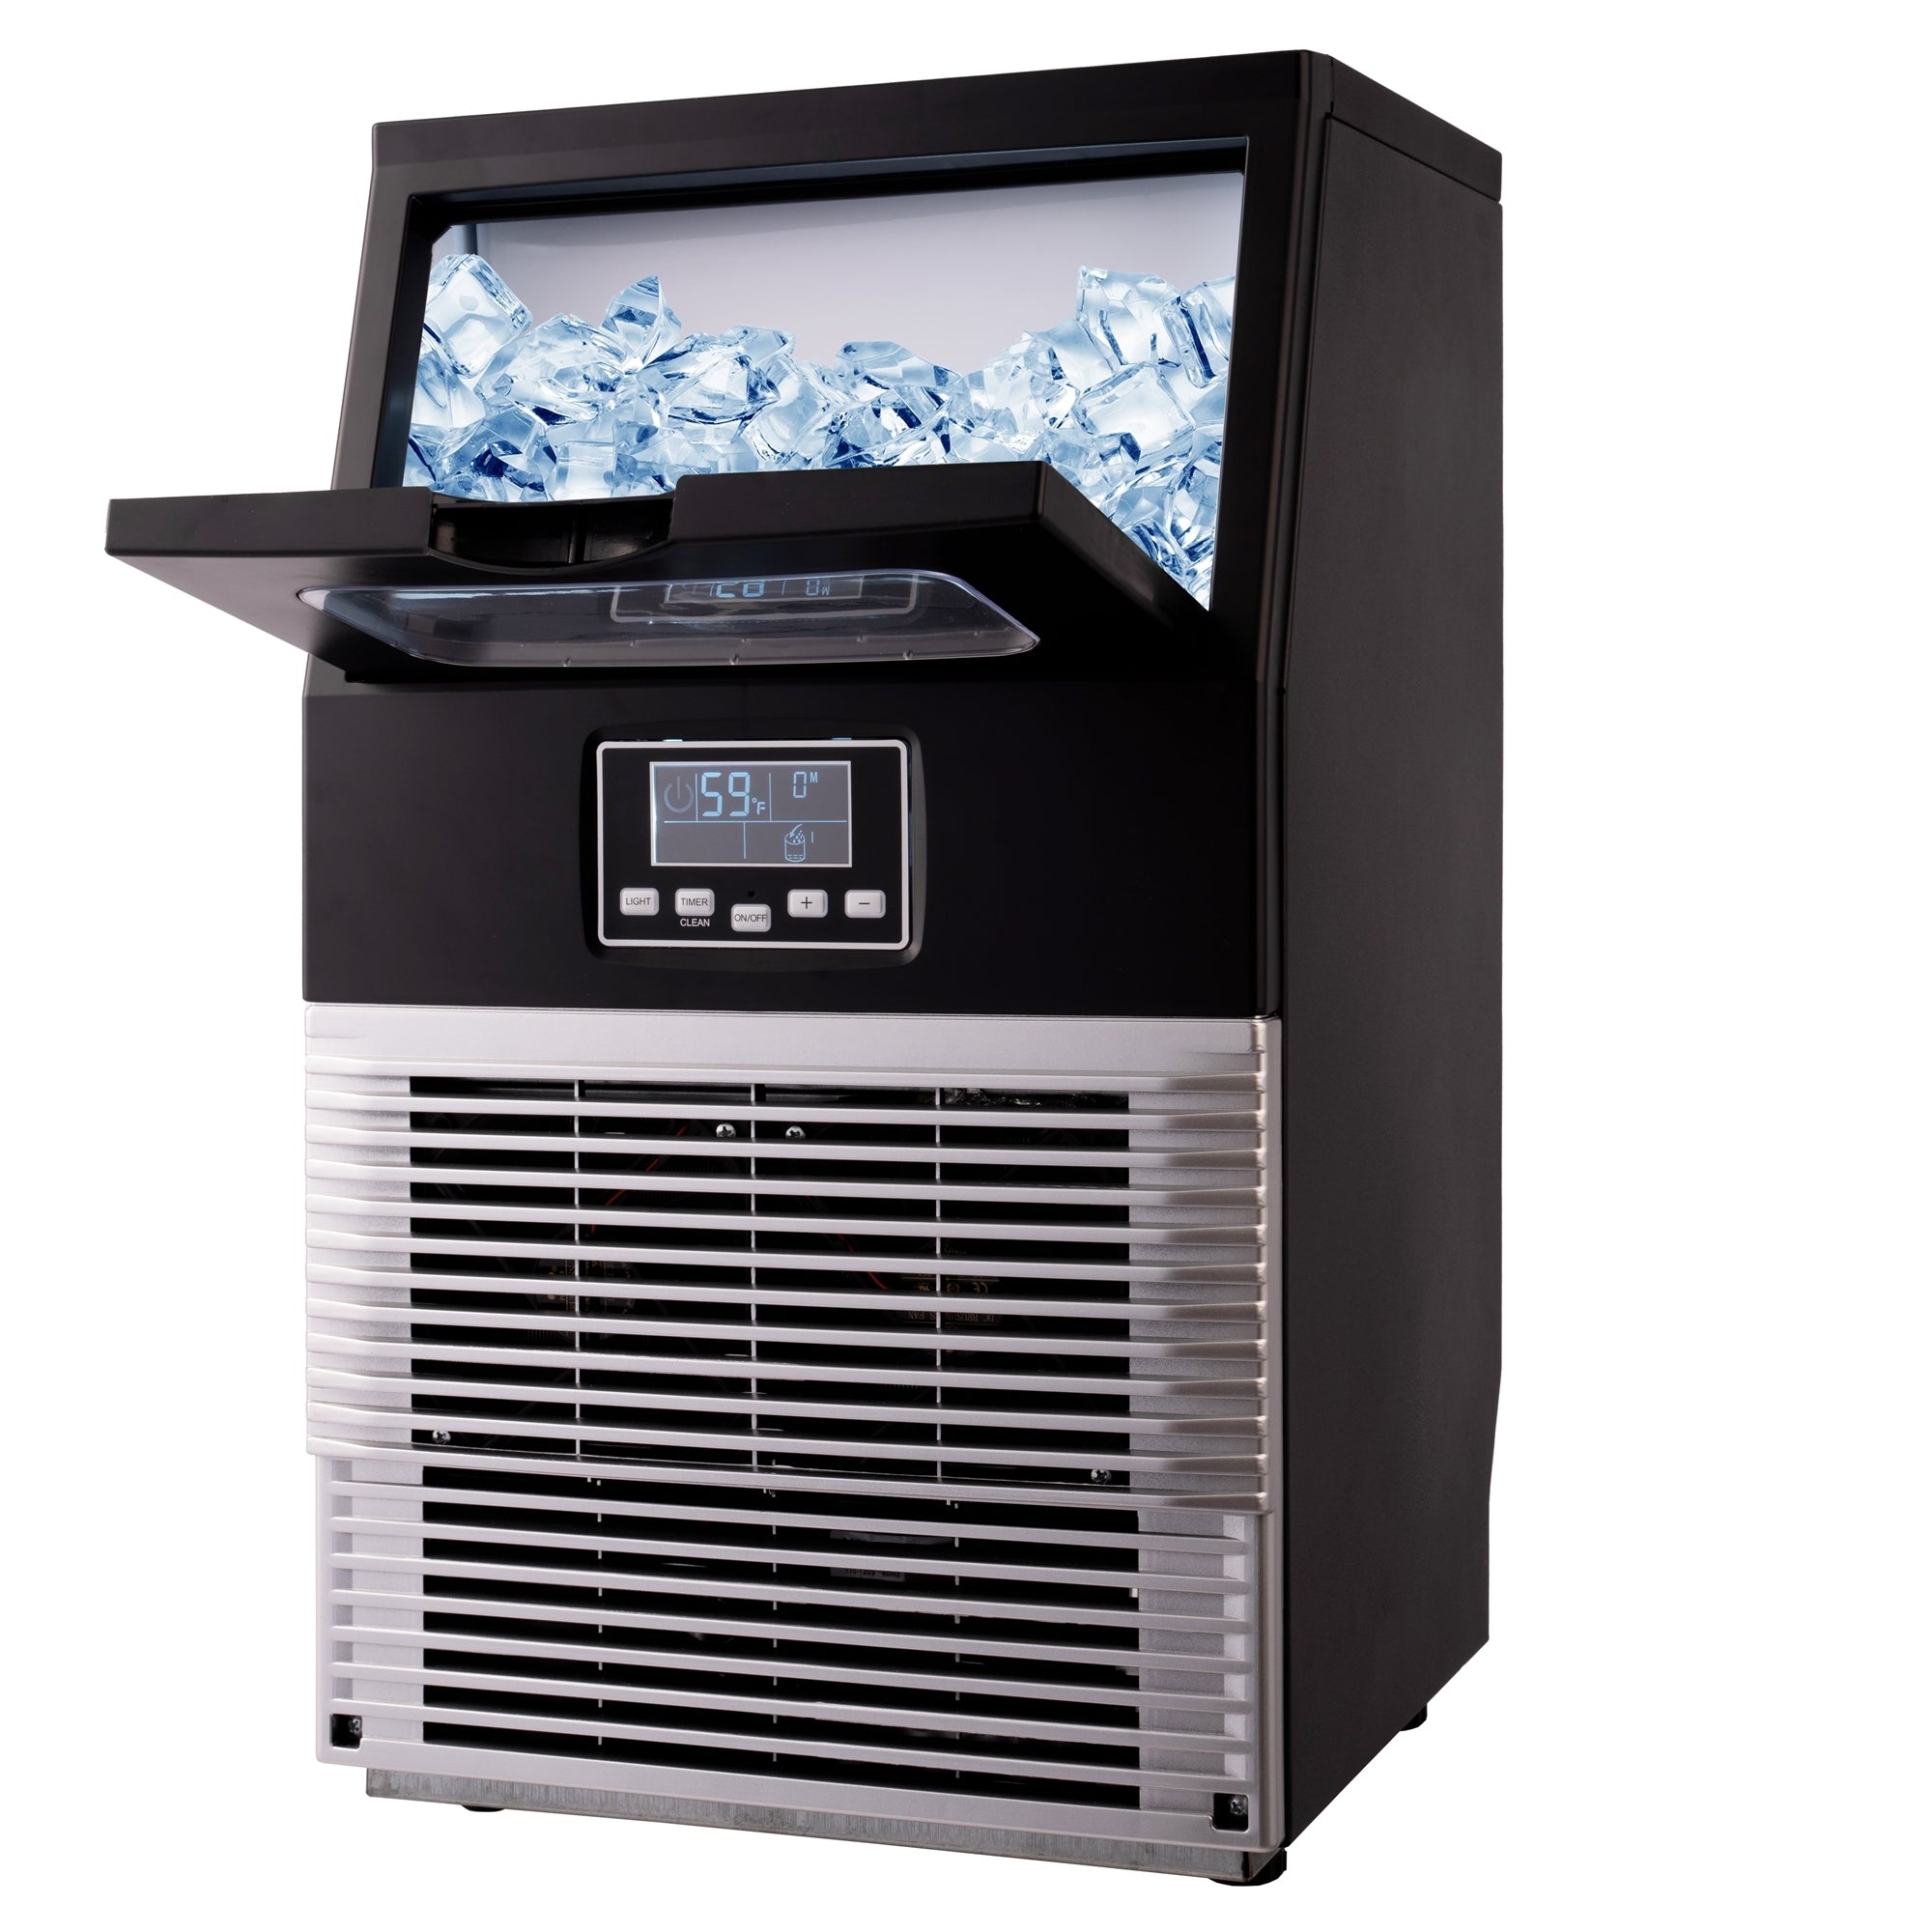 Freestanding Commercial Ice Maker Machine, Black